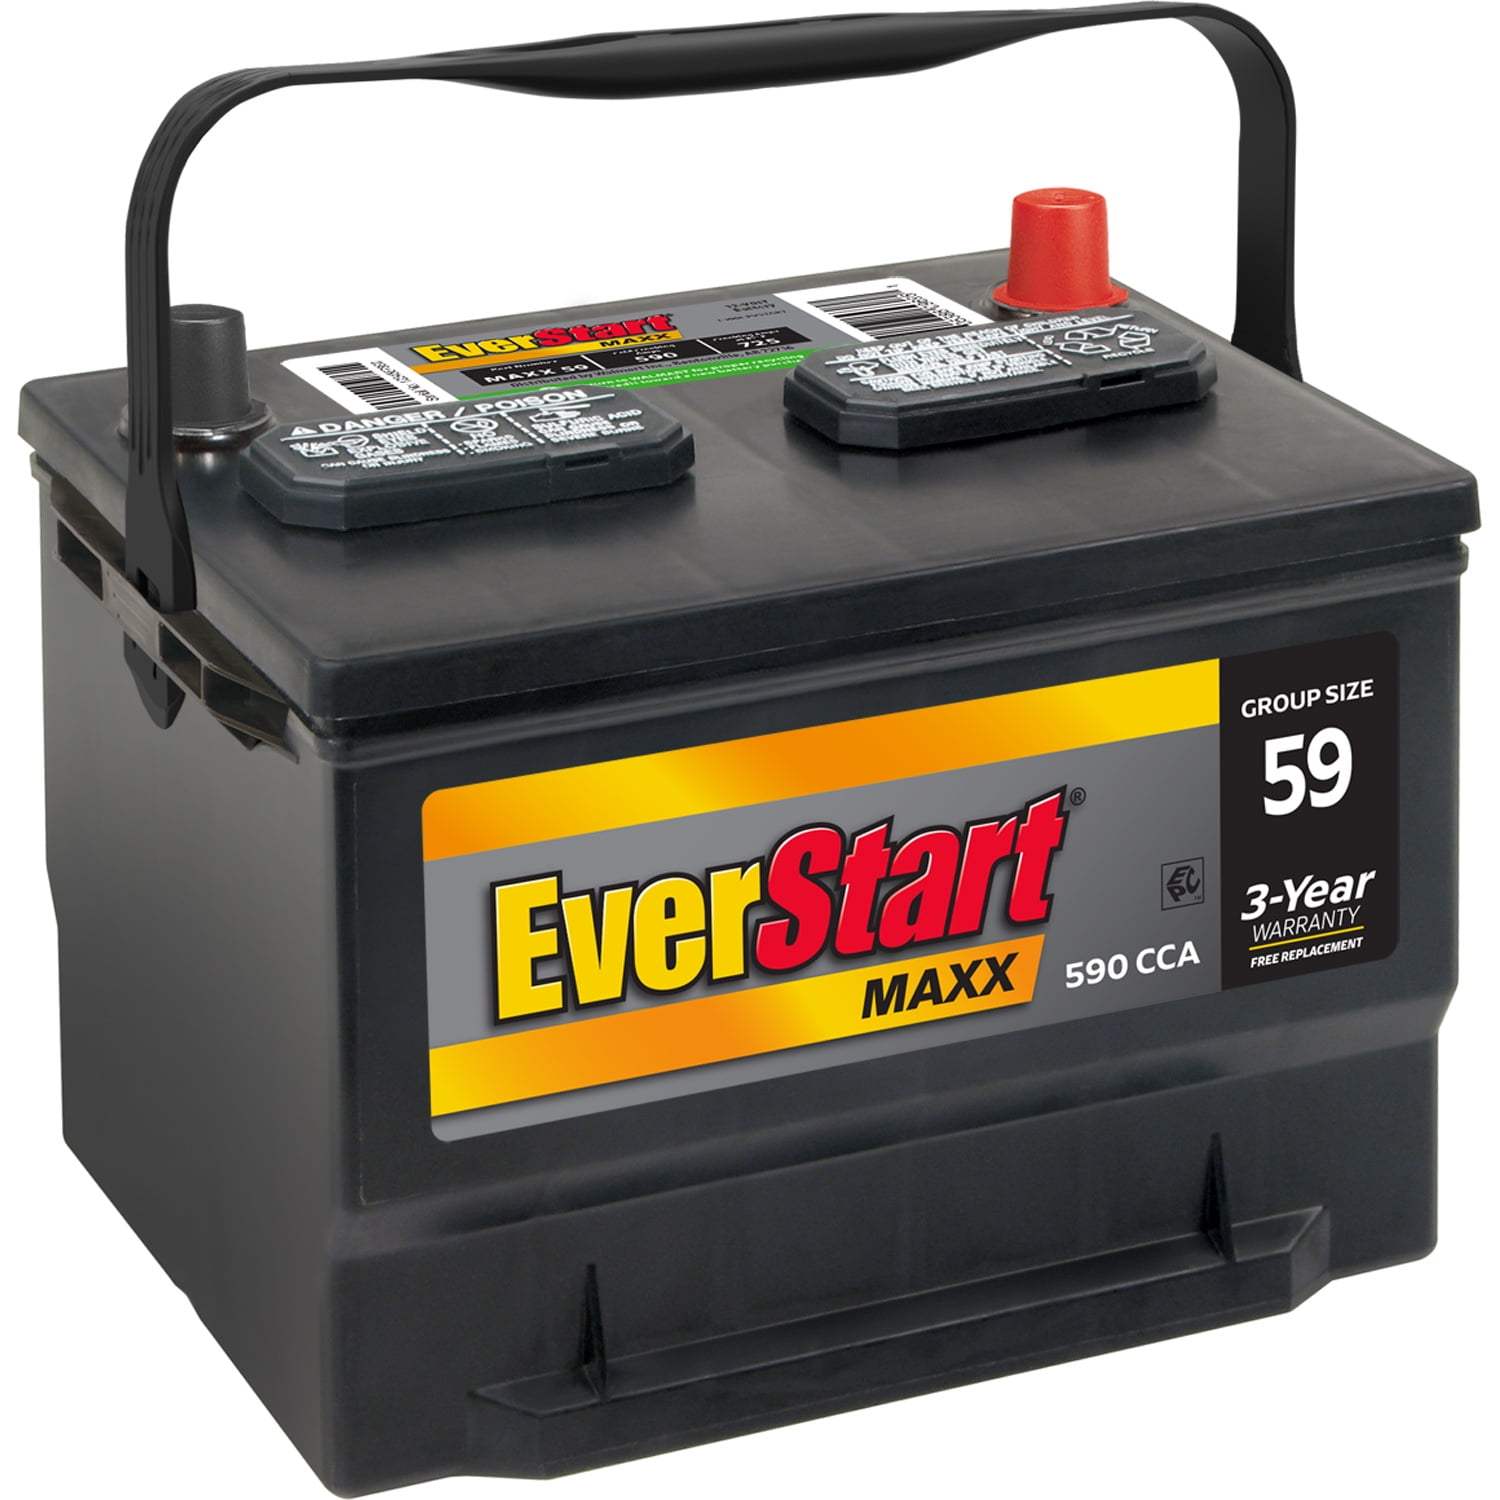 EverStart Maxx Lead Acid Automotive Battery, Groups Size 59 (12 Volt/590  CCA) - Walmart.com